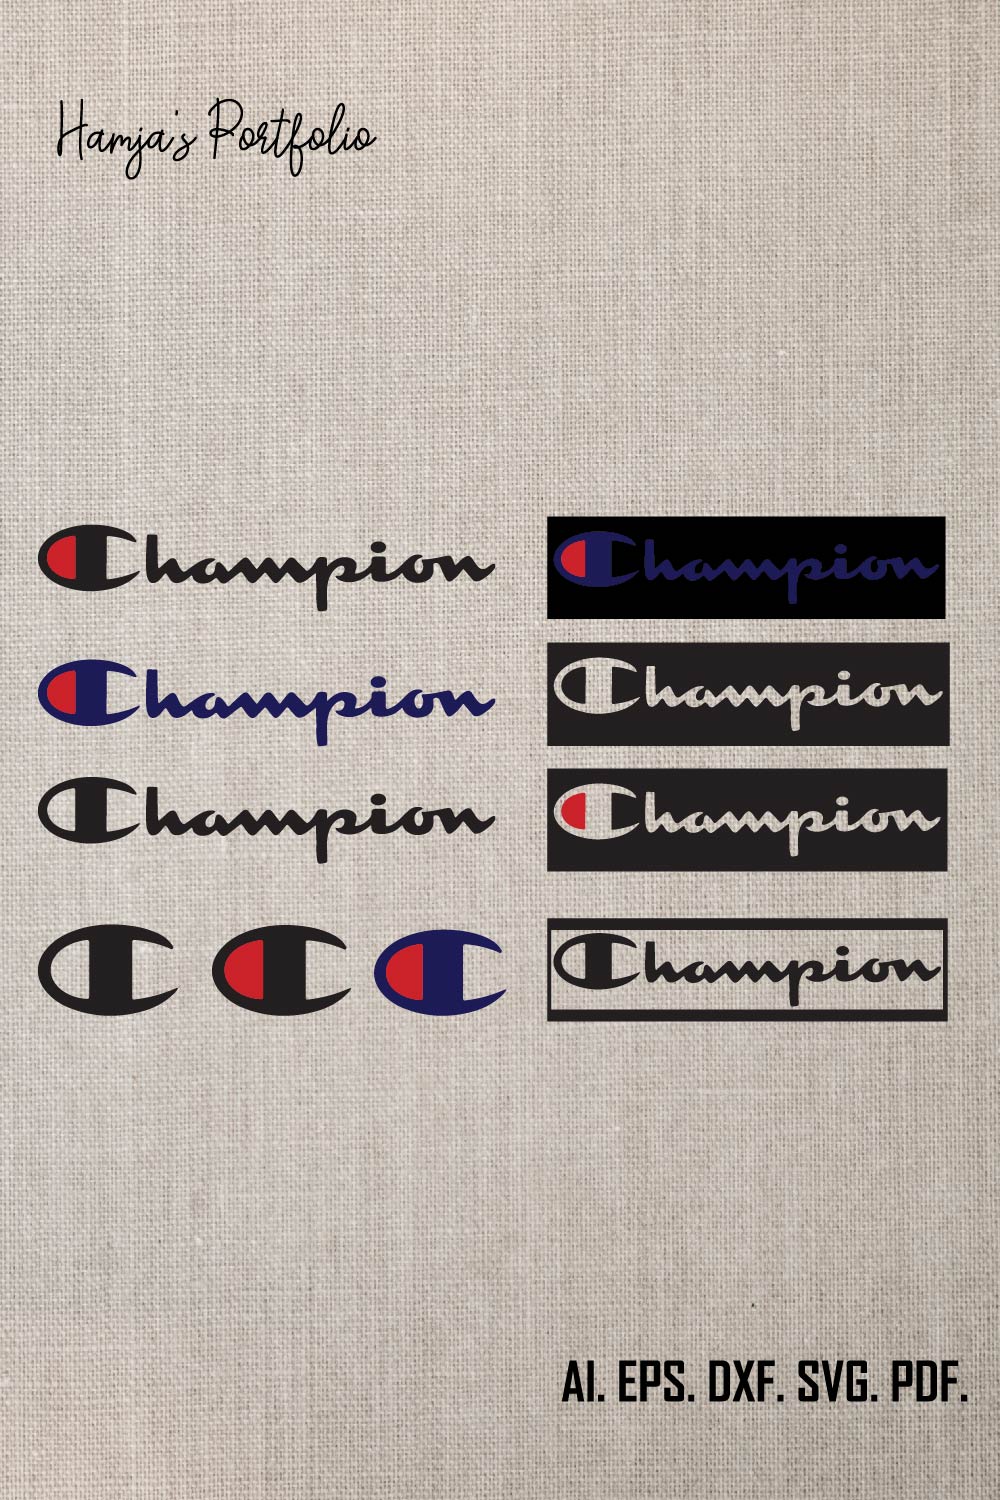 Champion, Champion SVG, Champion PNG, Champion logo, Champion cutfile, Champion cricut, Champion Clipart, Champion svg pinterest preview image.